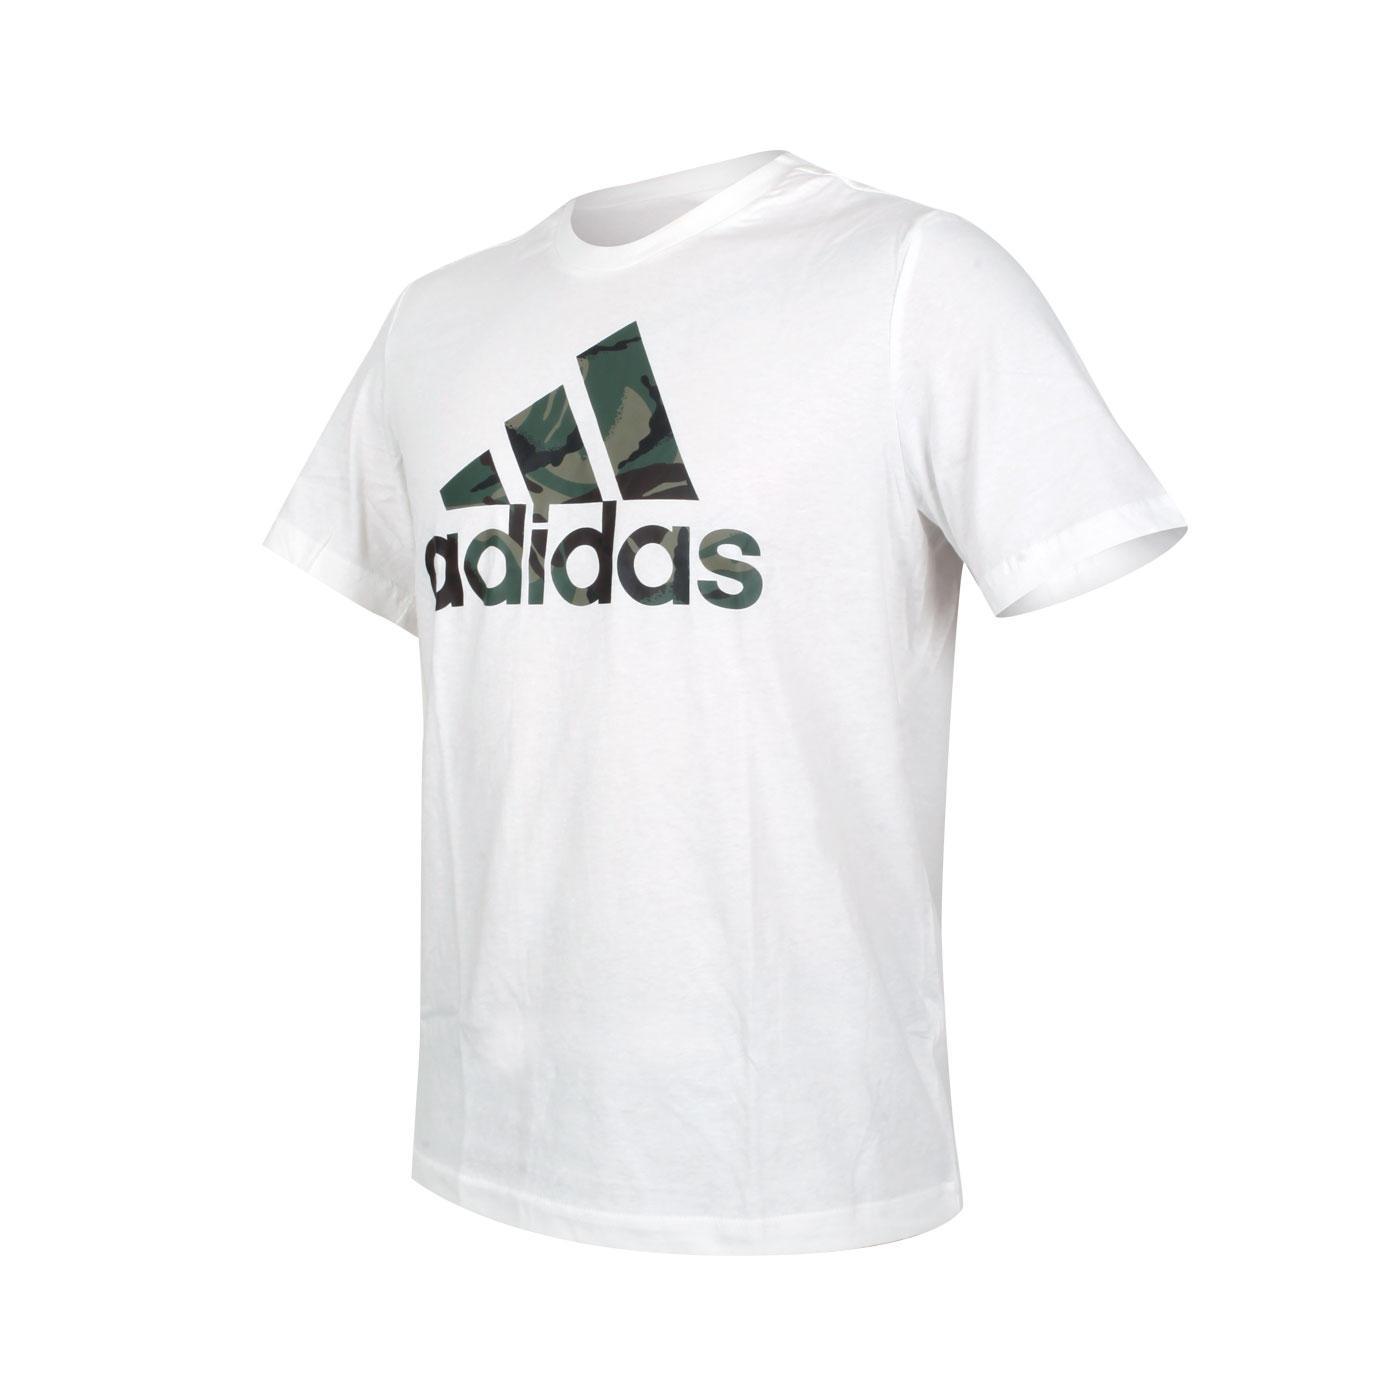 ADIDAS 男款短袖T恤 GK9635 - 白迷彩綠黑